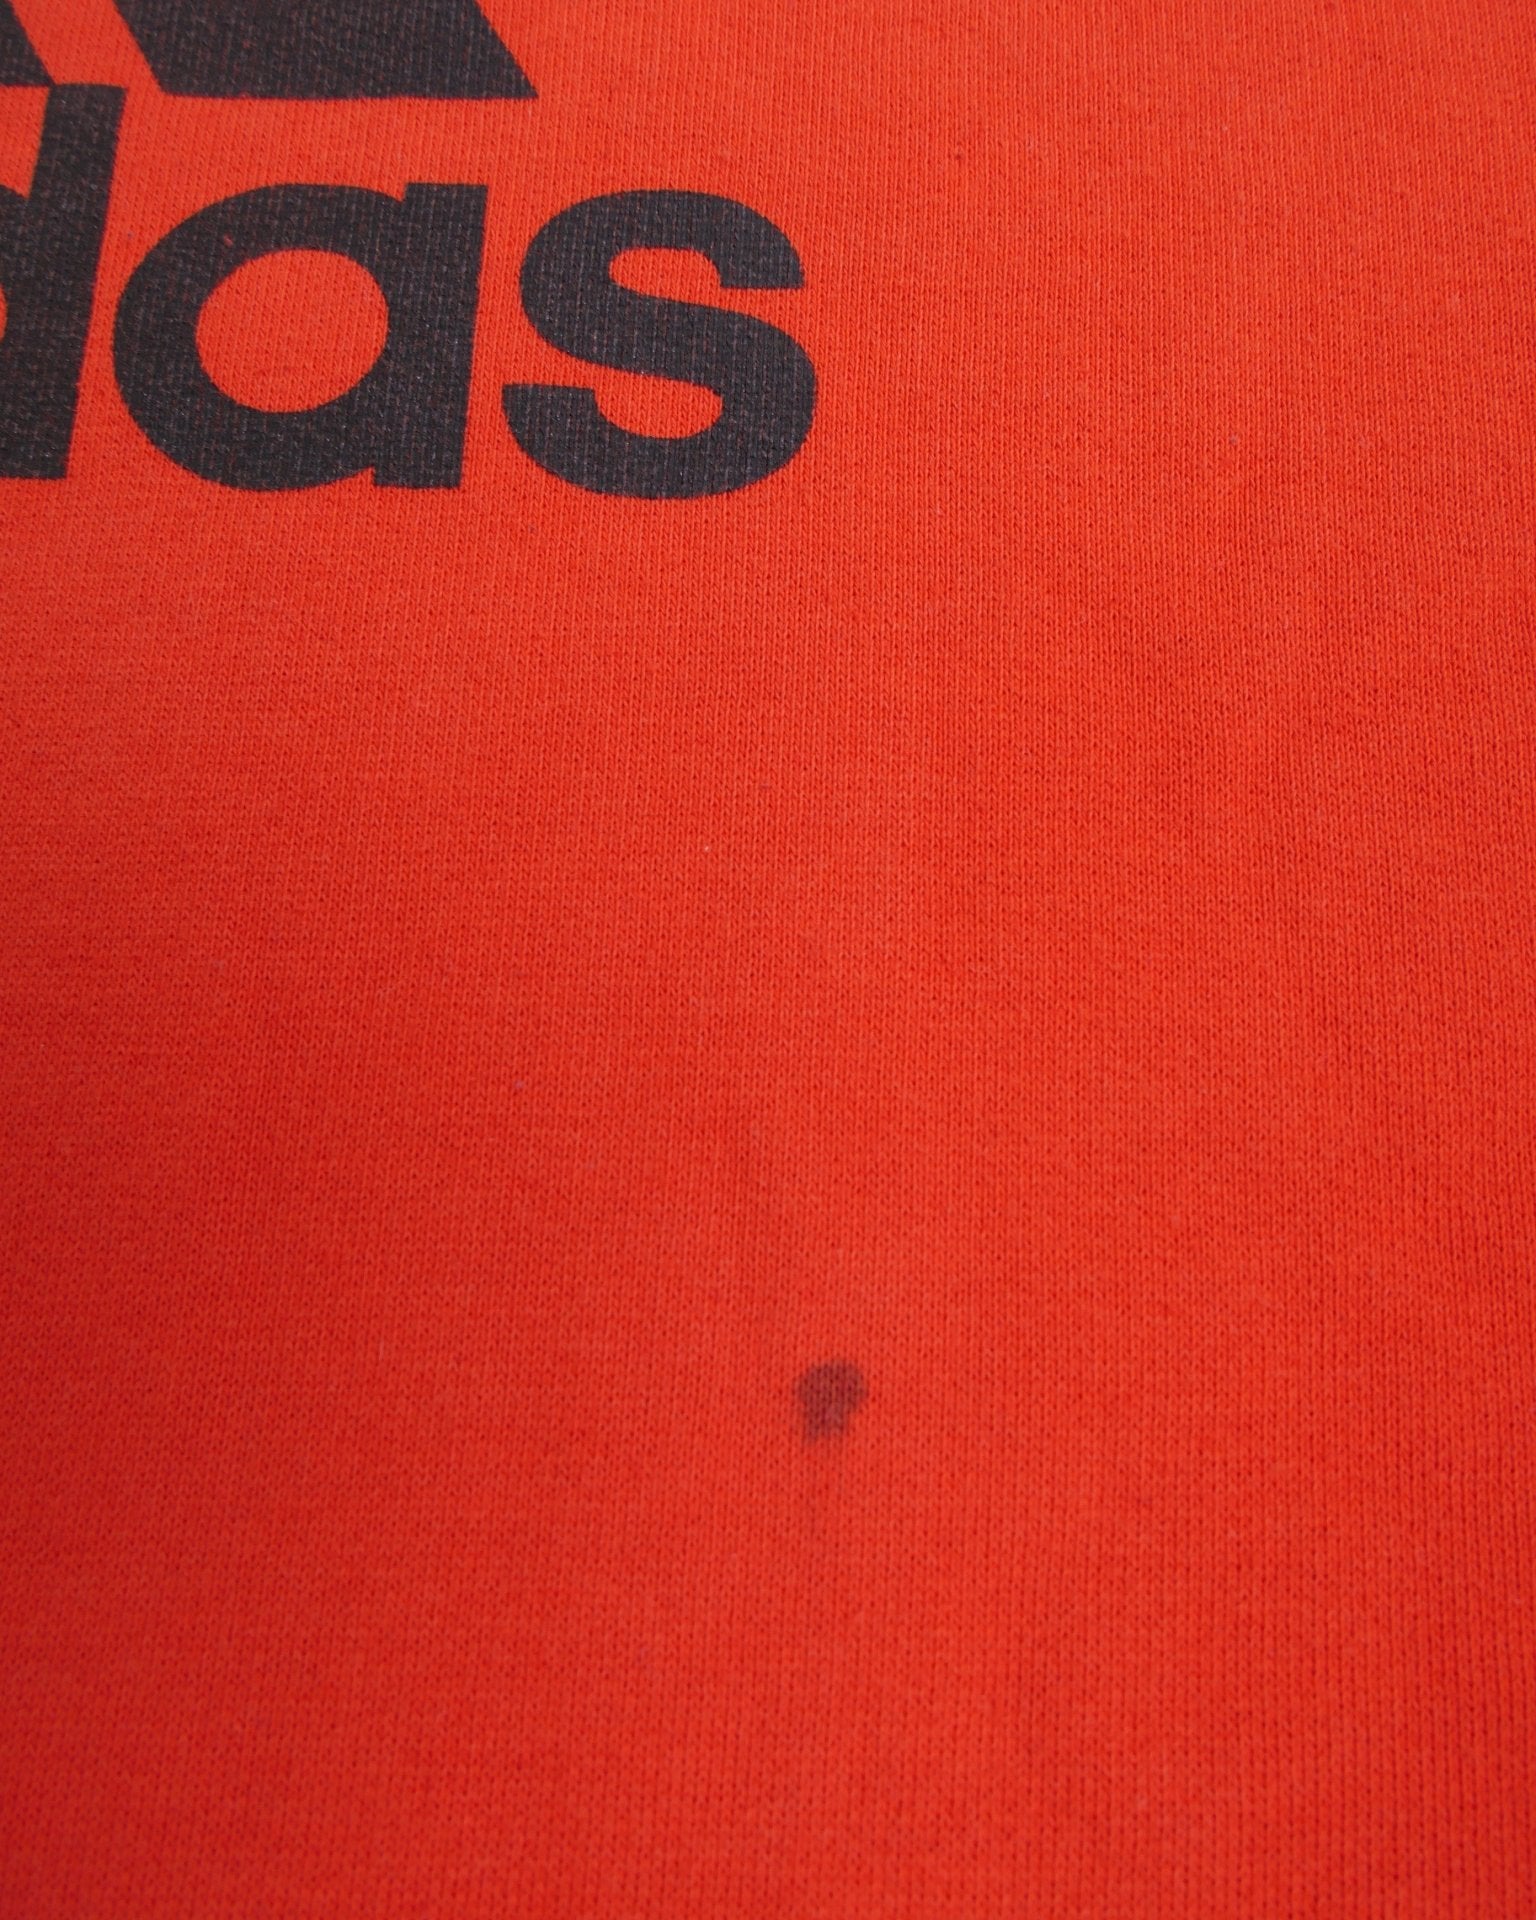 Adidas printed Logo orange basic Hoodie - Peeces